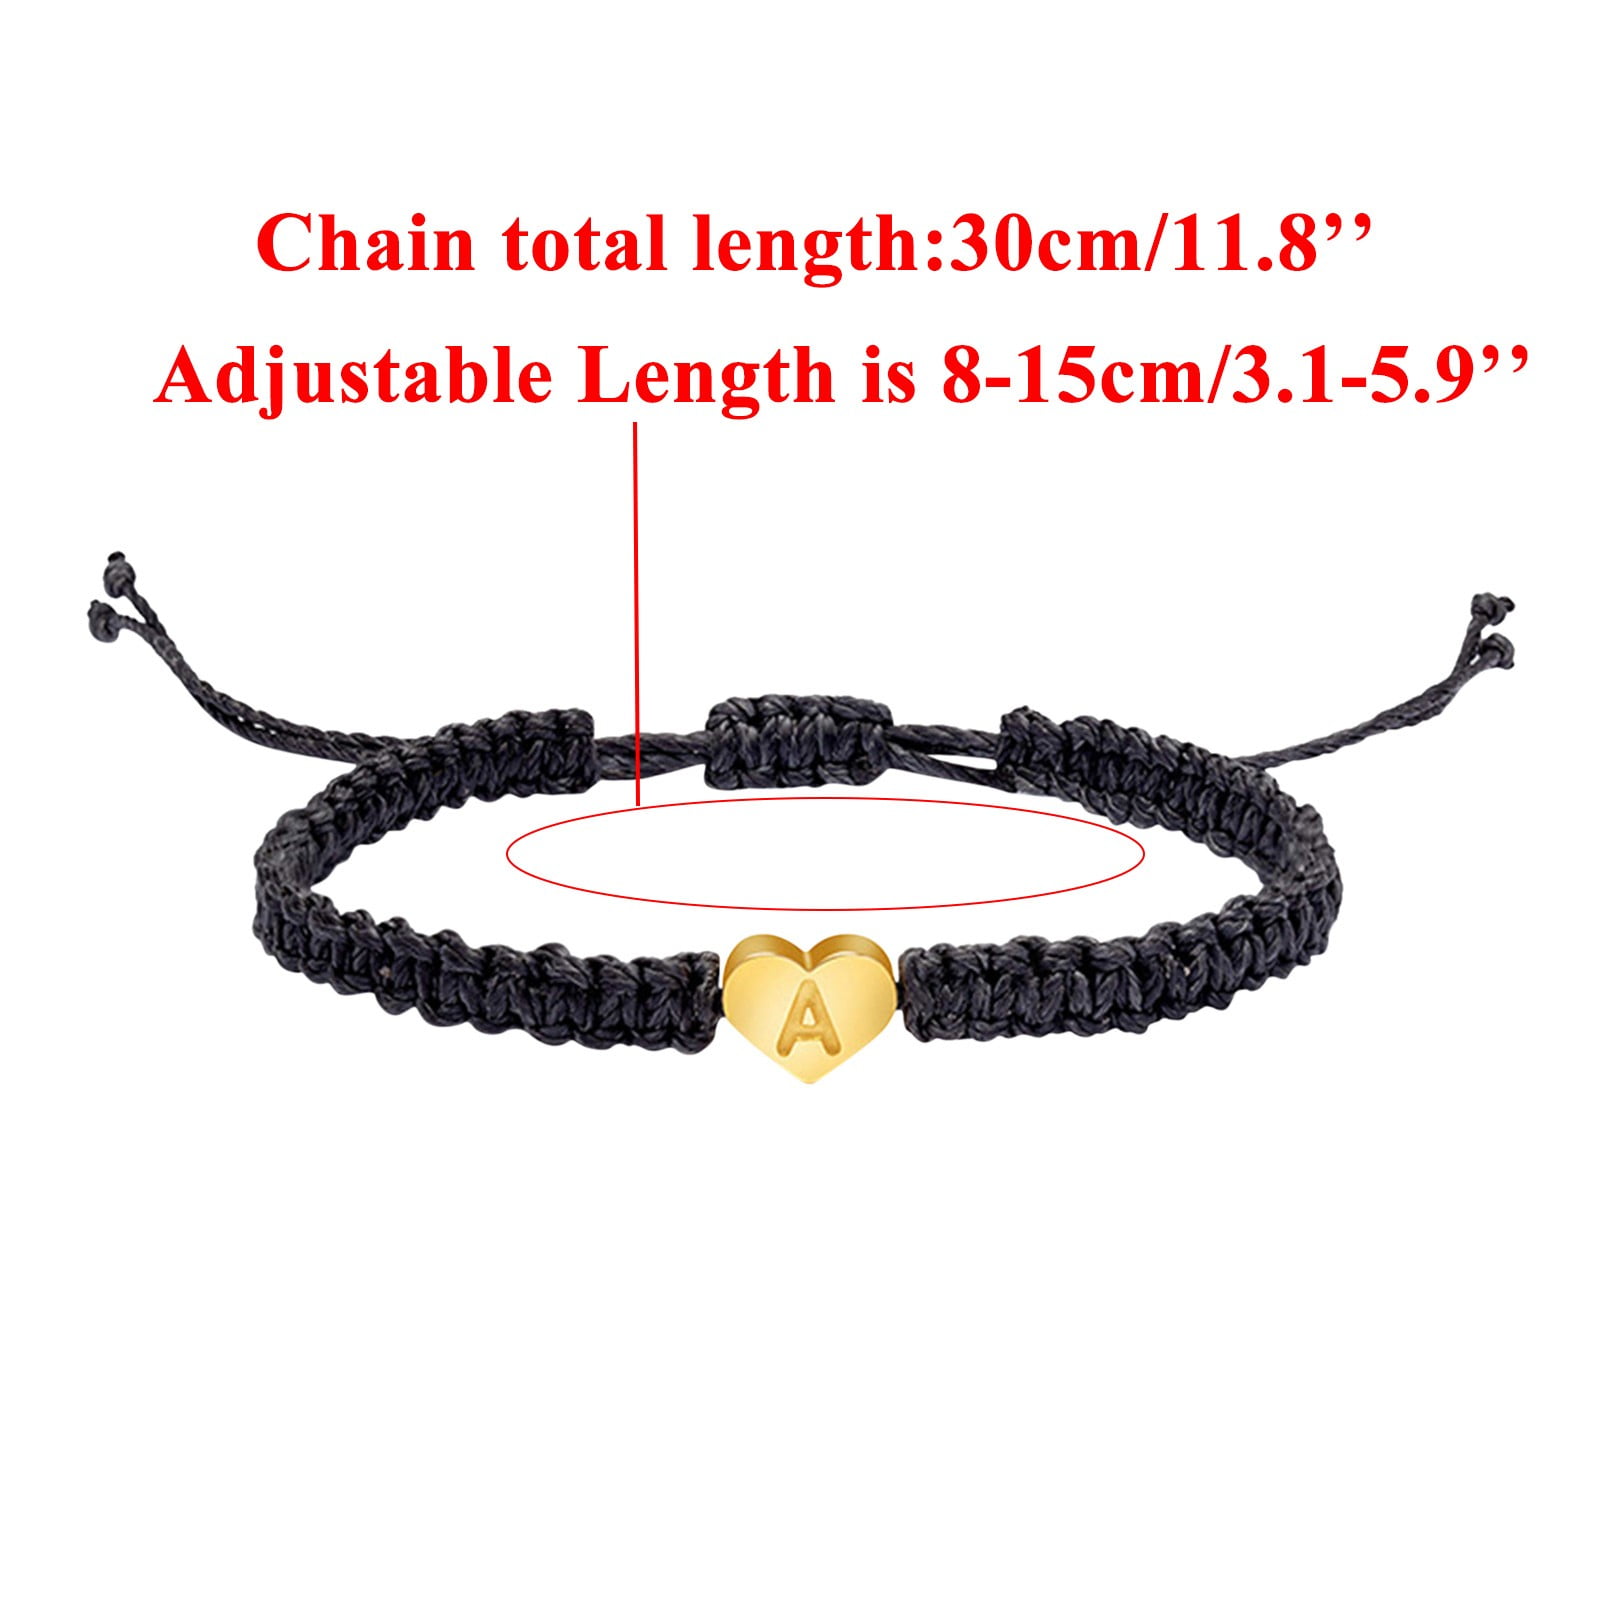 Personalized 26 Initial Bracelet Red Seven Knot Bracelet Gold Plated Letter  Woven Bracelet Fine Jewelry (R, One Size)